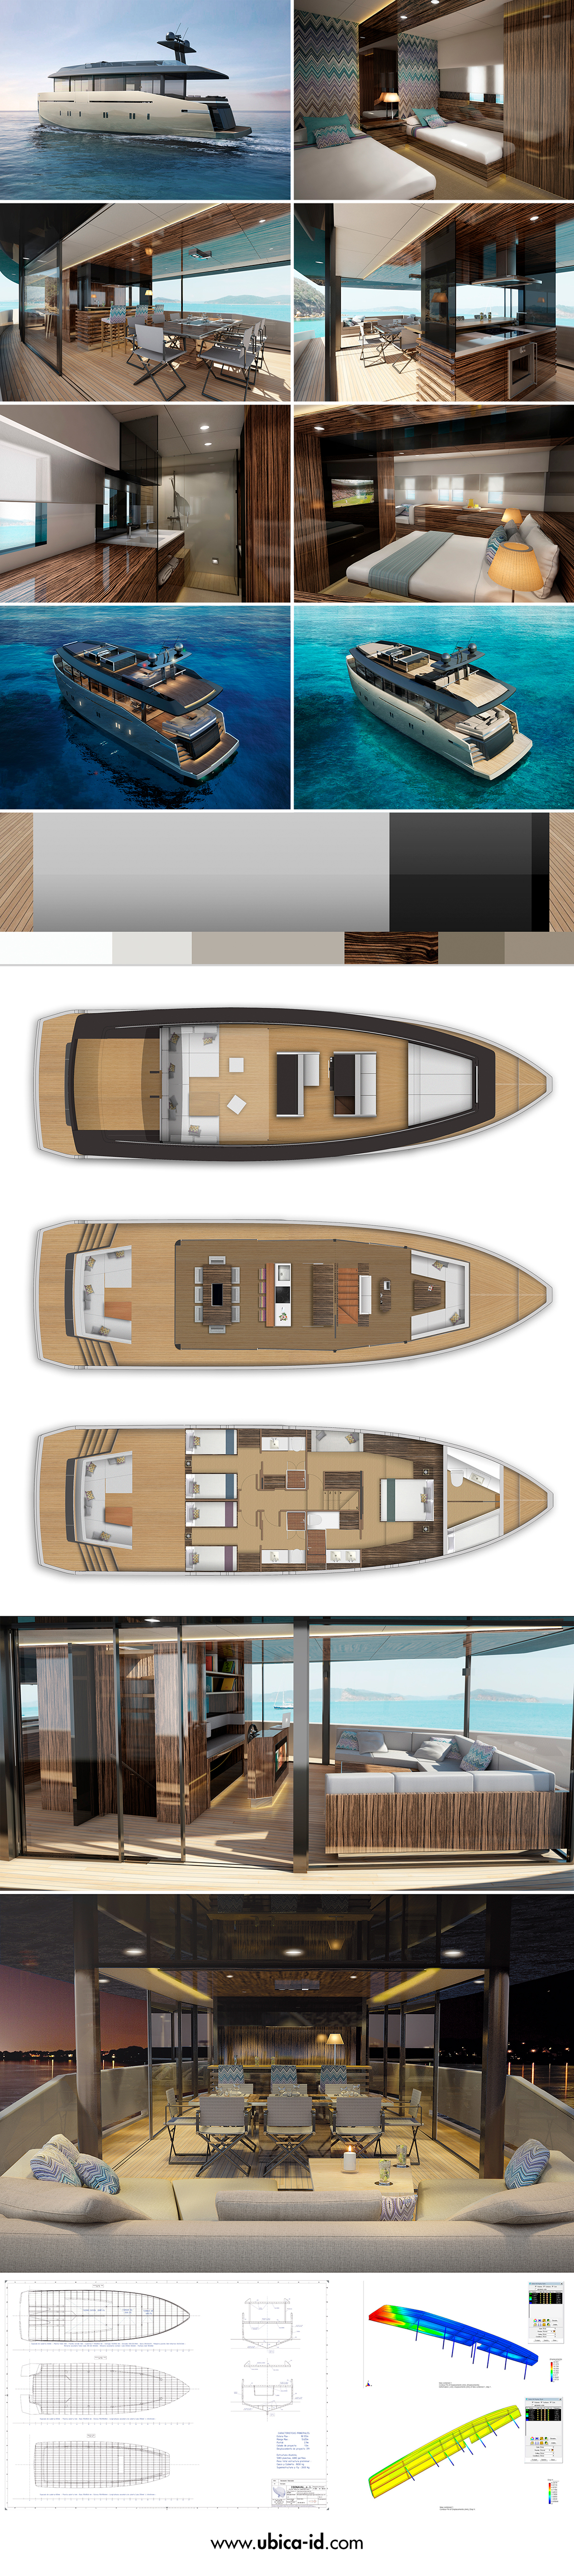 yacht Yacht Design ubica-id s60 design